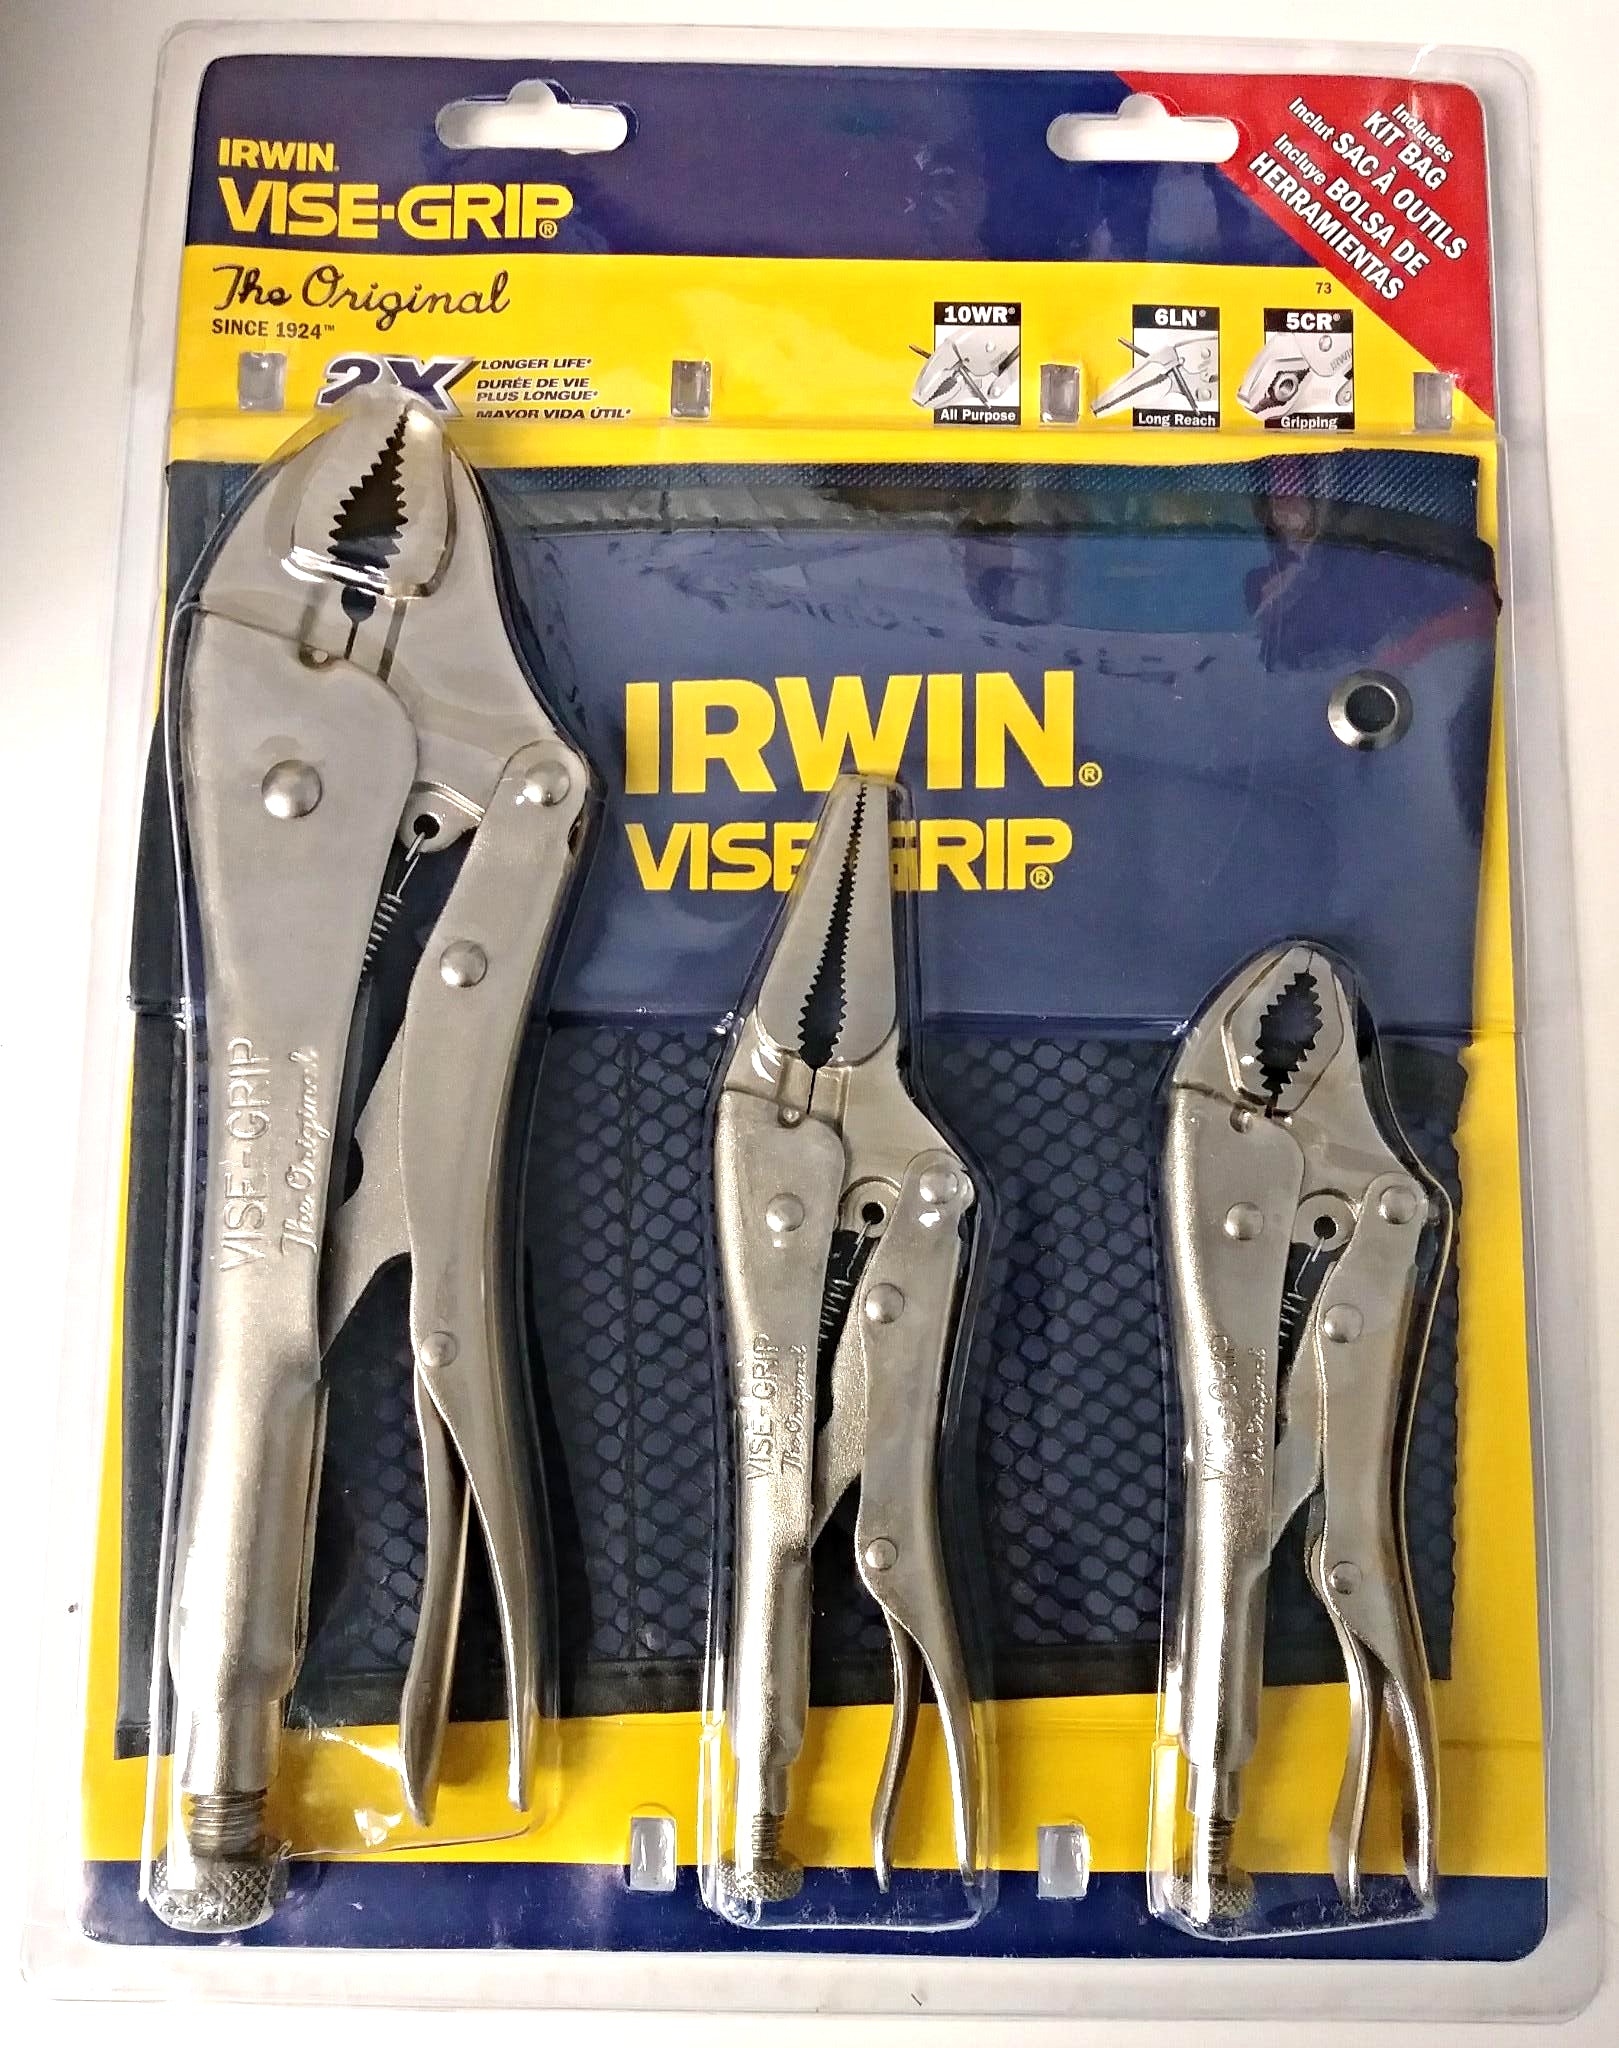 Irwin Vise-Grip 73 3 Piece Locking Pliers Set; 10WR 6LN & 5CR with Kit Bag